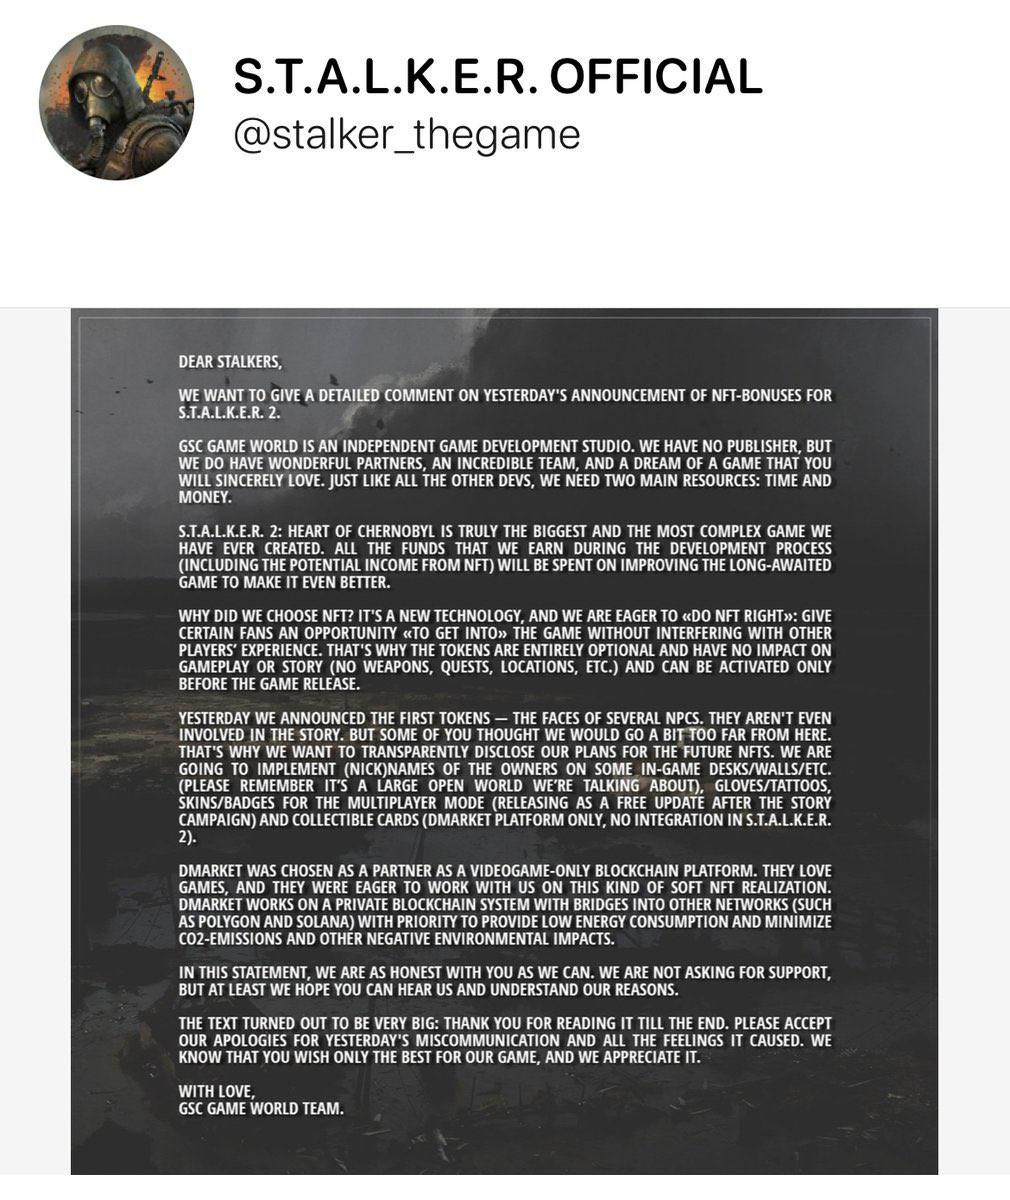 STALKER 2's release date has been delayed until December - Polygon